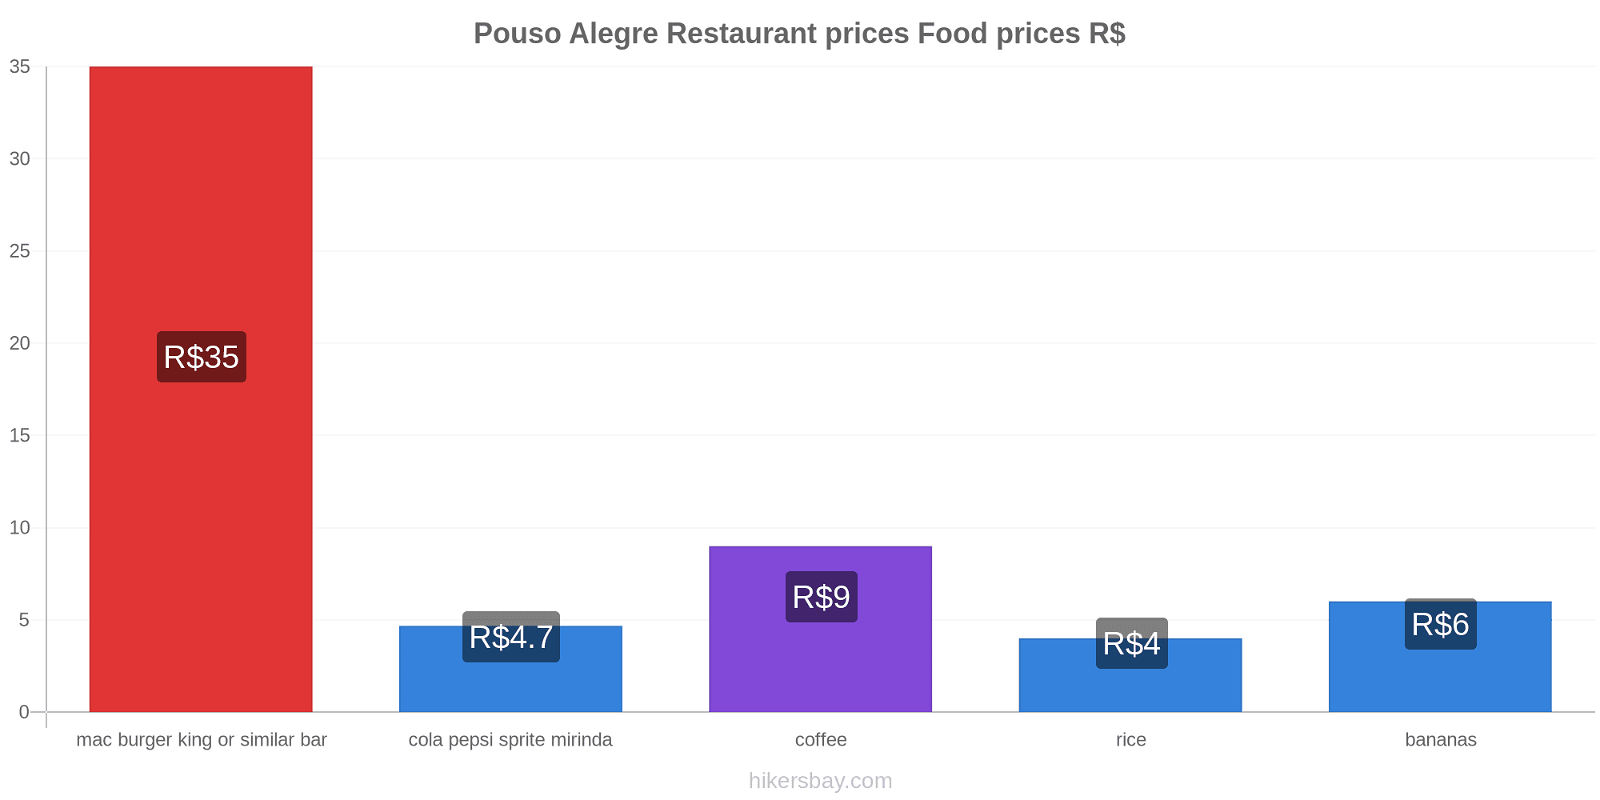 Pouso Alegre price changes hikersbay.com